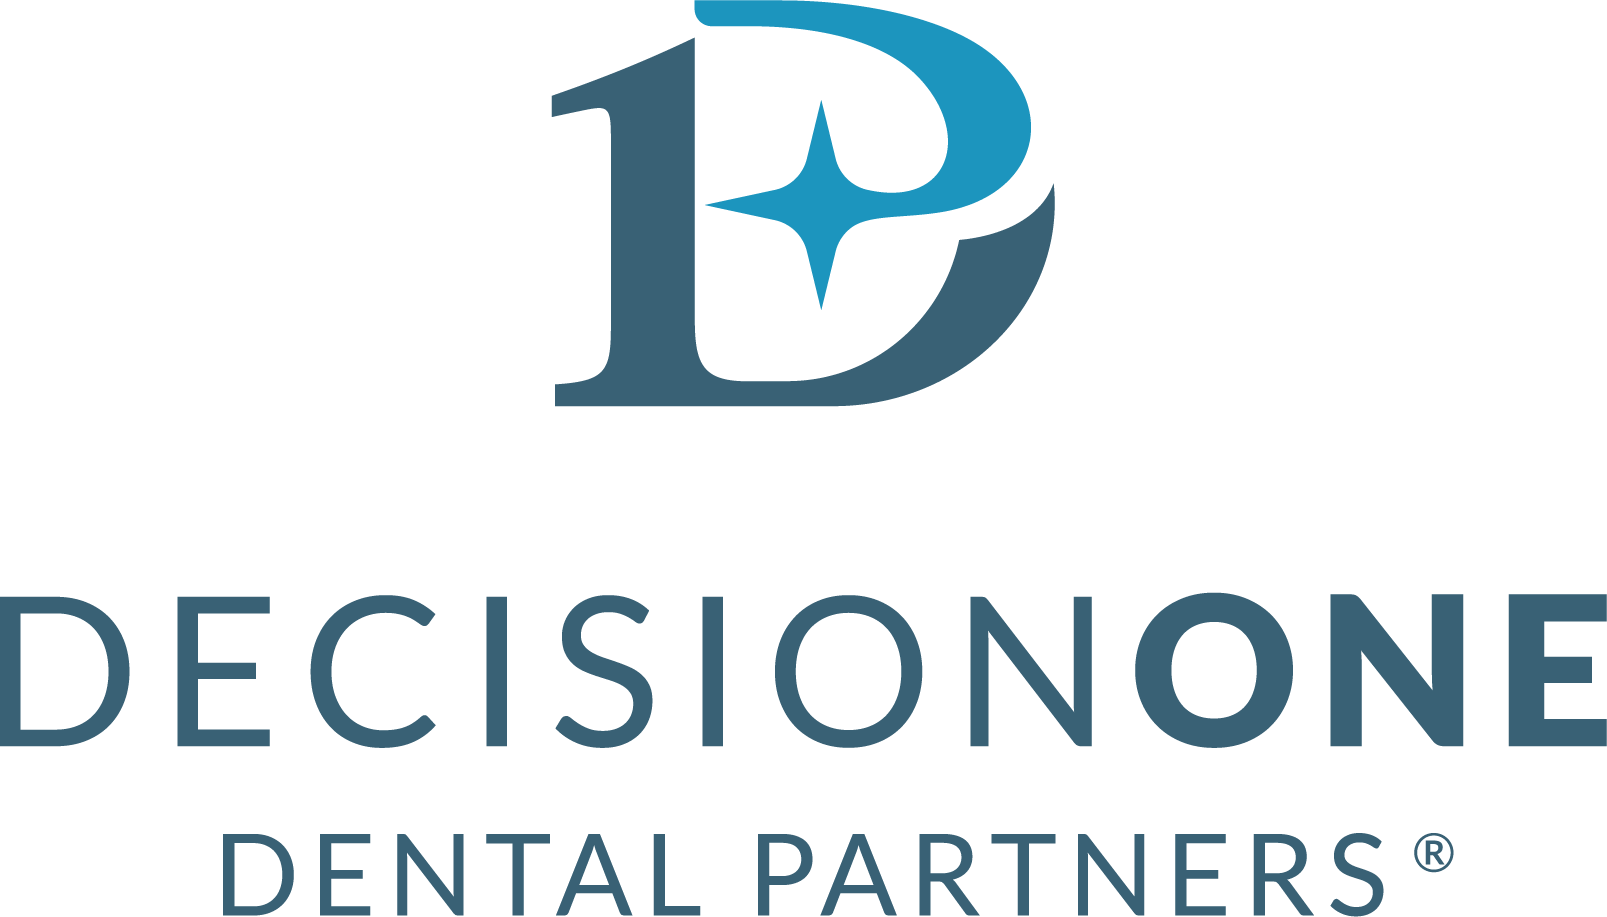 DecisionOne Dental Partners logo